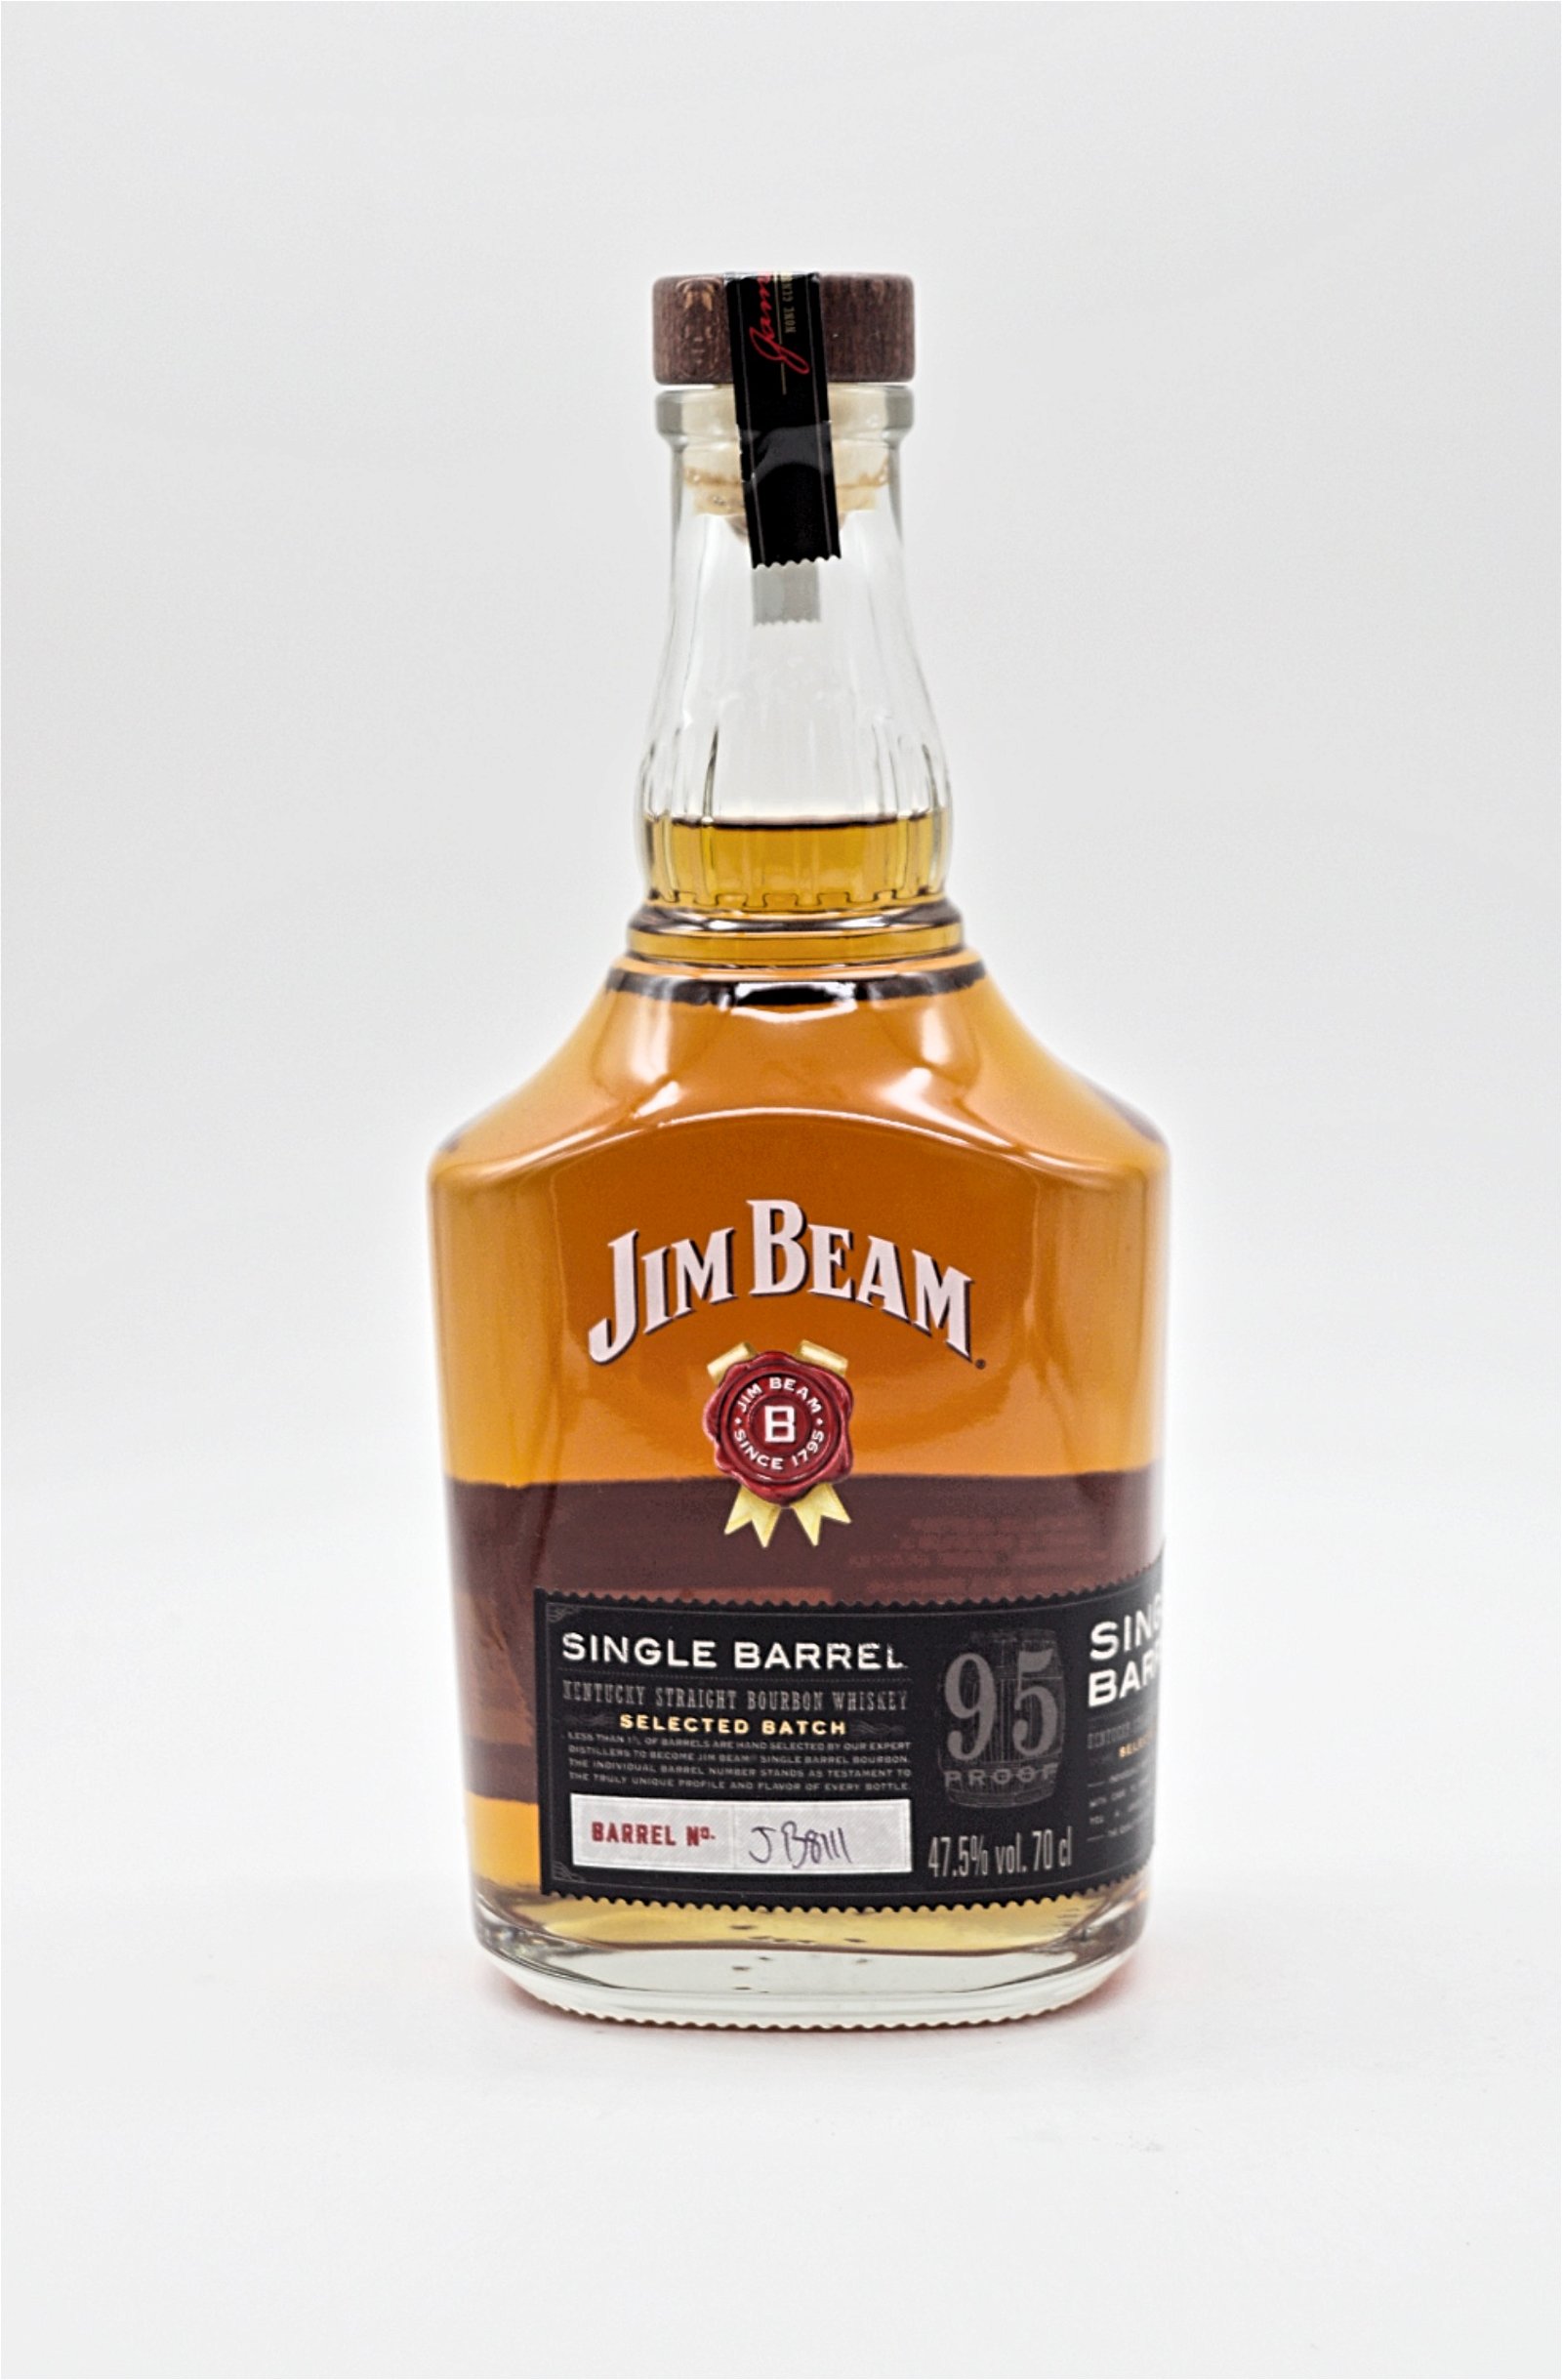 Jim Beam Single Barrel Kentucky Straight Bourbon Whiskey Selected Batch 95 Proof